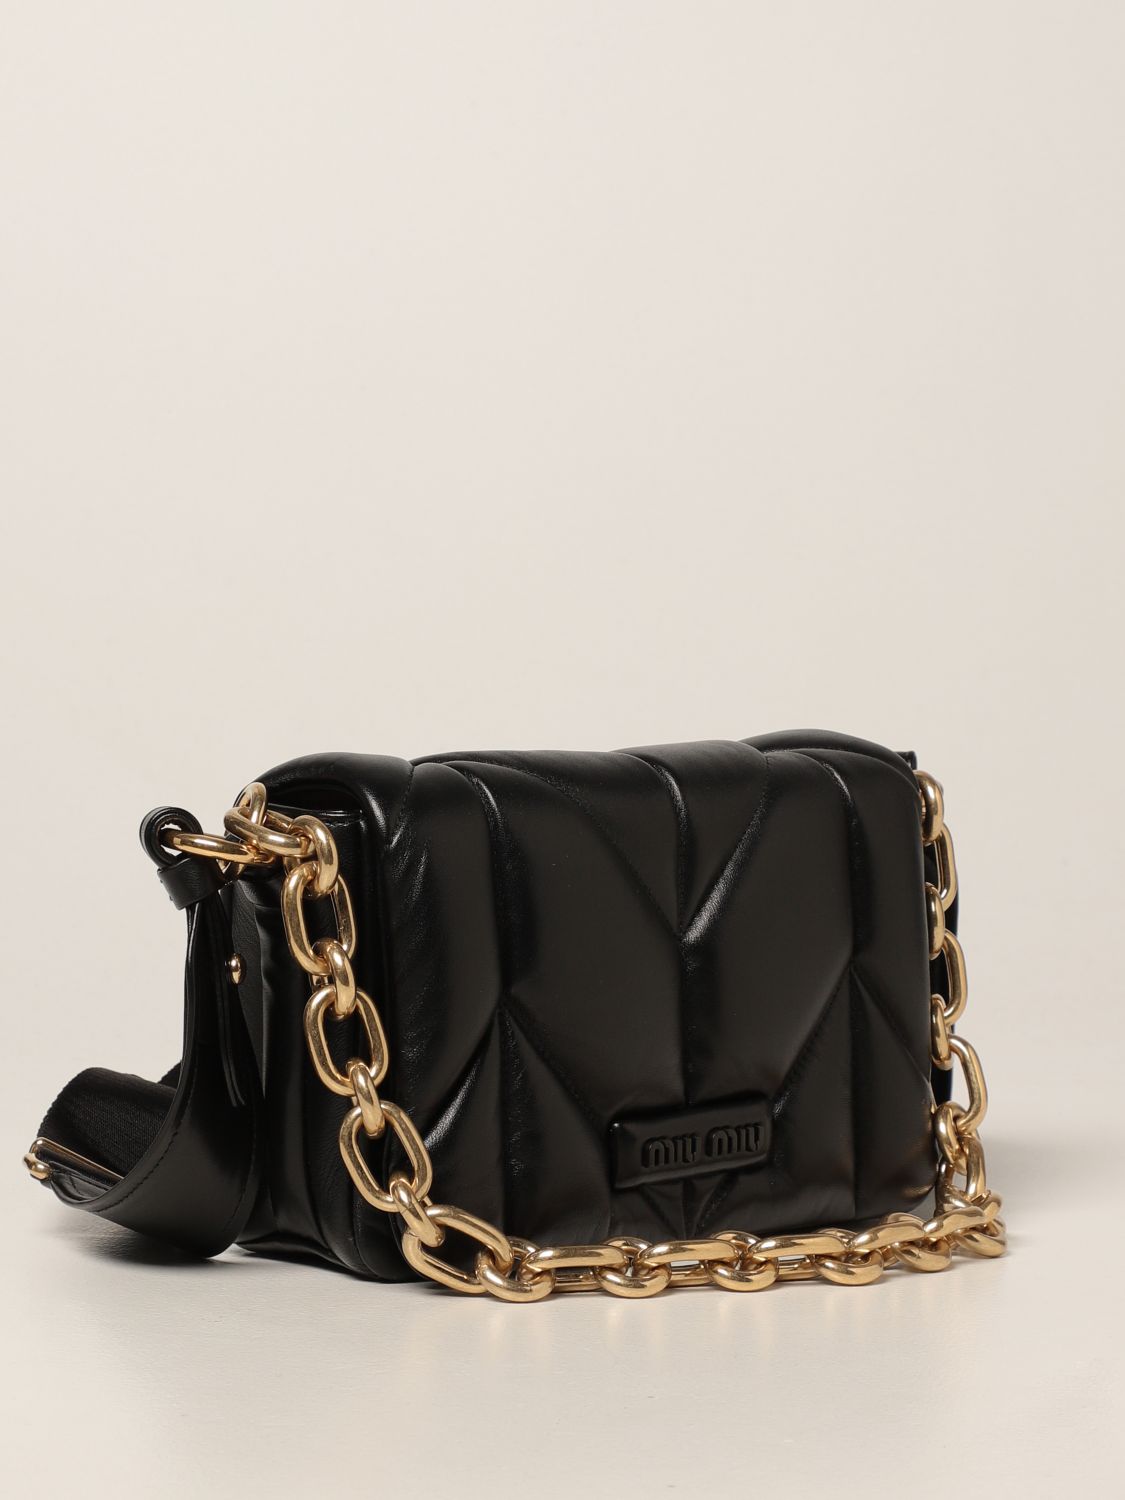 MIU MIU: bag in quilted nappa leather - Black  Miu Miu crossbody bags  5BH1892CE3 online at